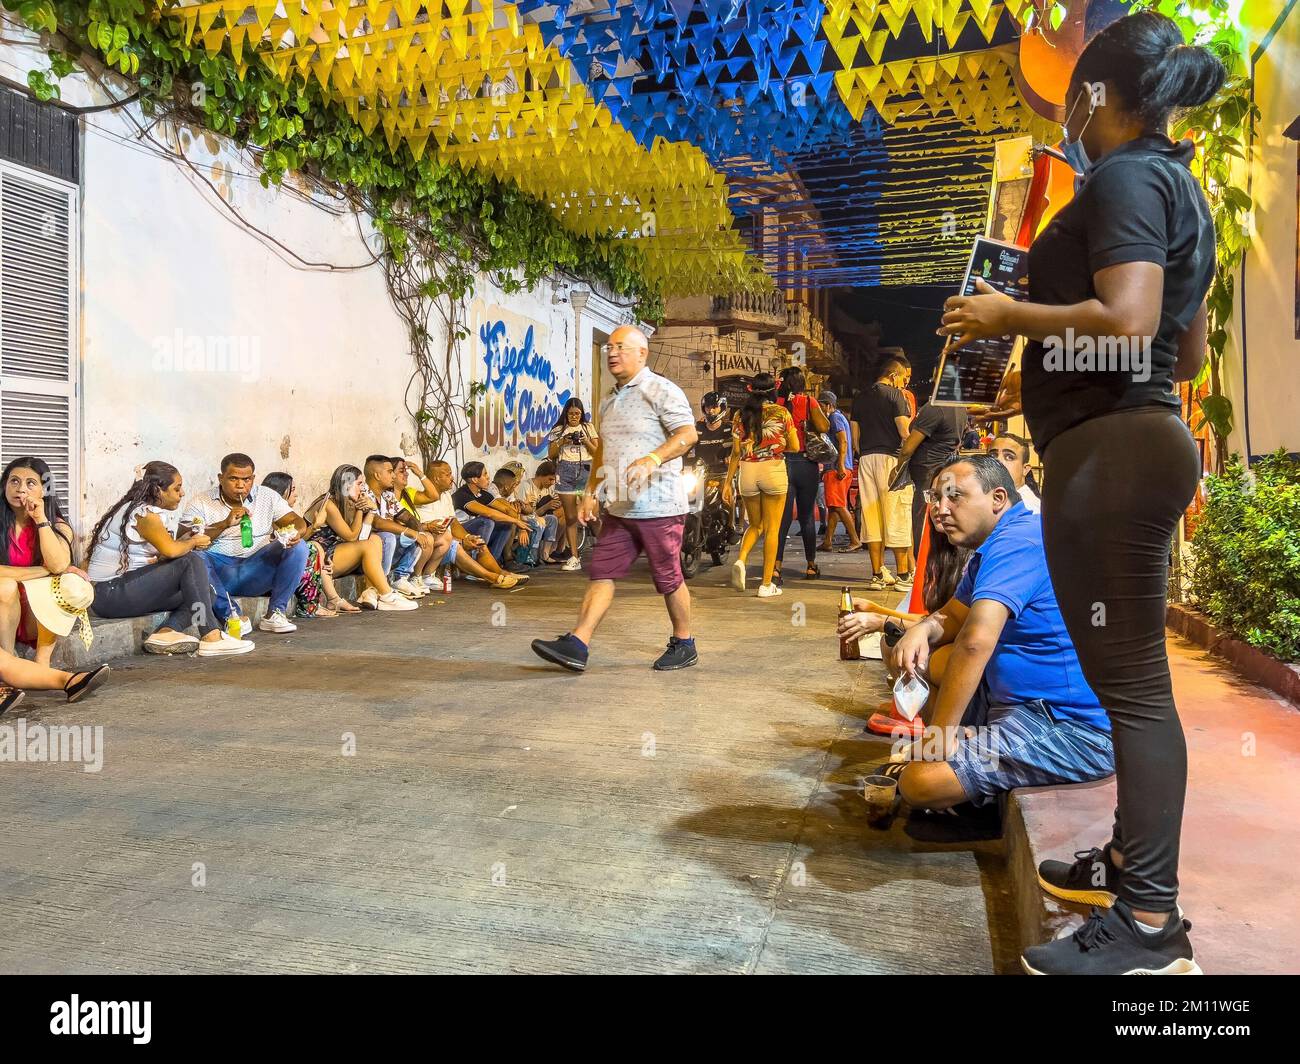 South America, Colombia, Departamento de Bolívar, Cartagena de Indias, Barrio Getsemaní, street scene in Getsemaní neighborhood Stock Photo